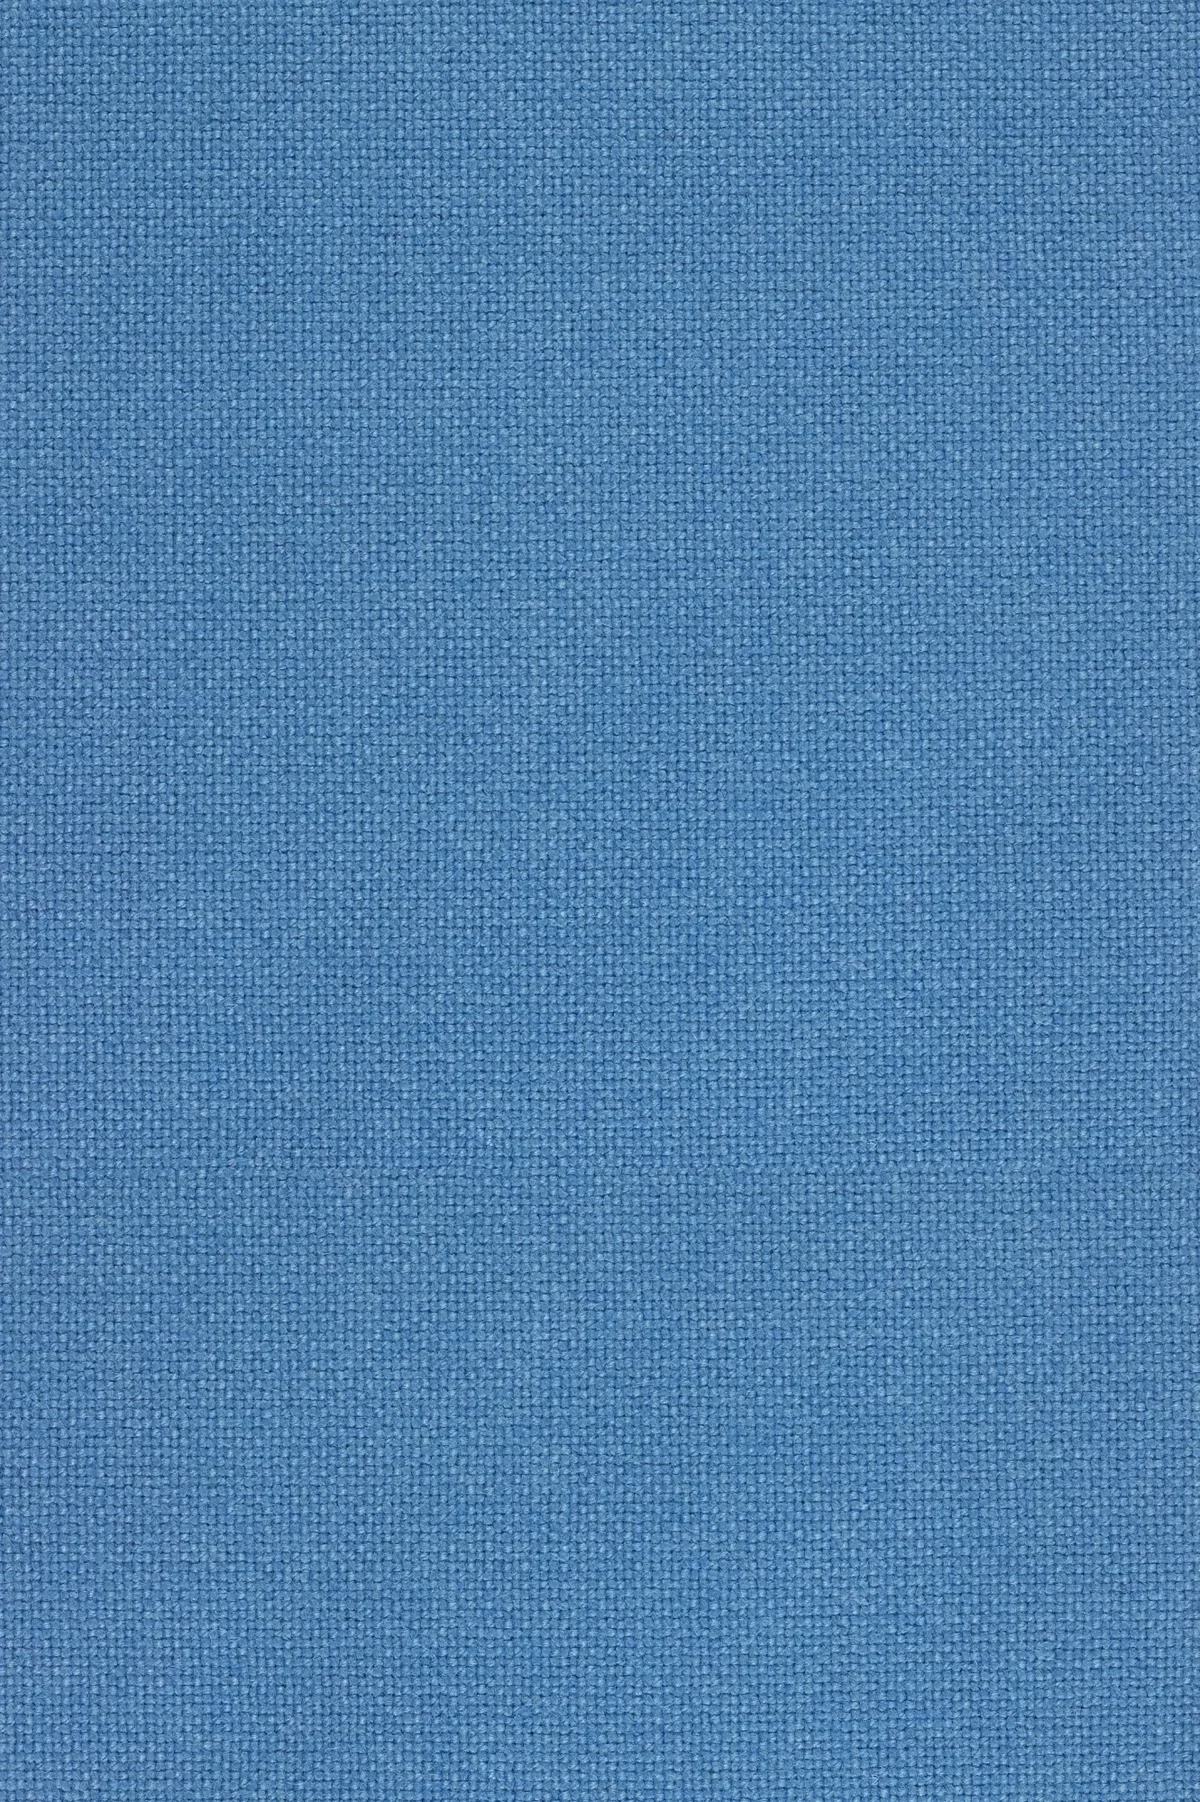 Fabric sample Hallingdal 65 723 blue